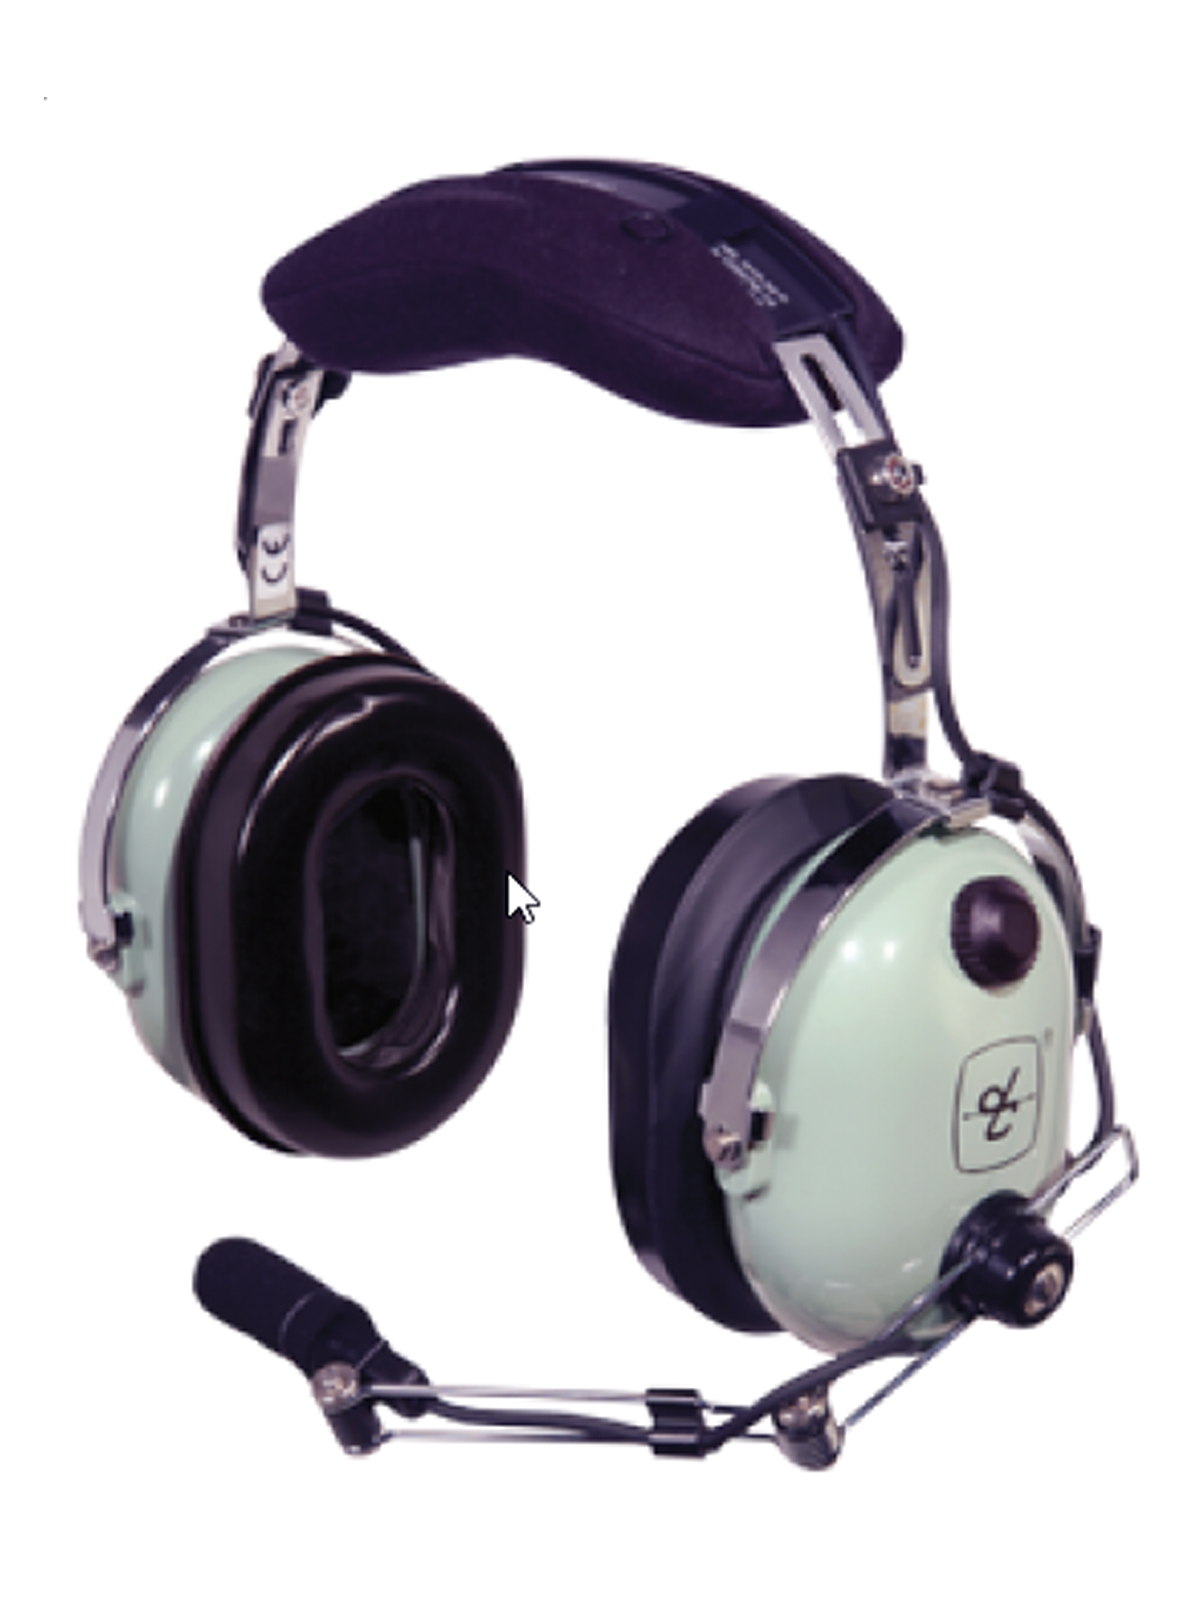 David Clark H10-30 Headset - PJ-Stecker, gerades Kabel, passiv